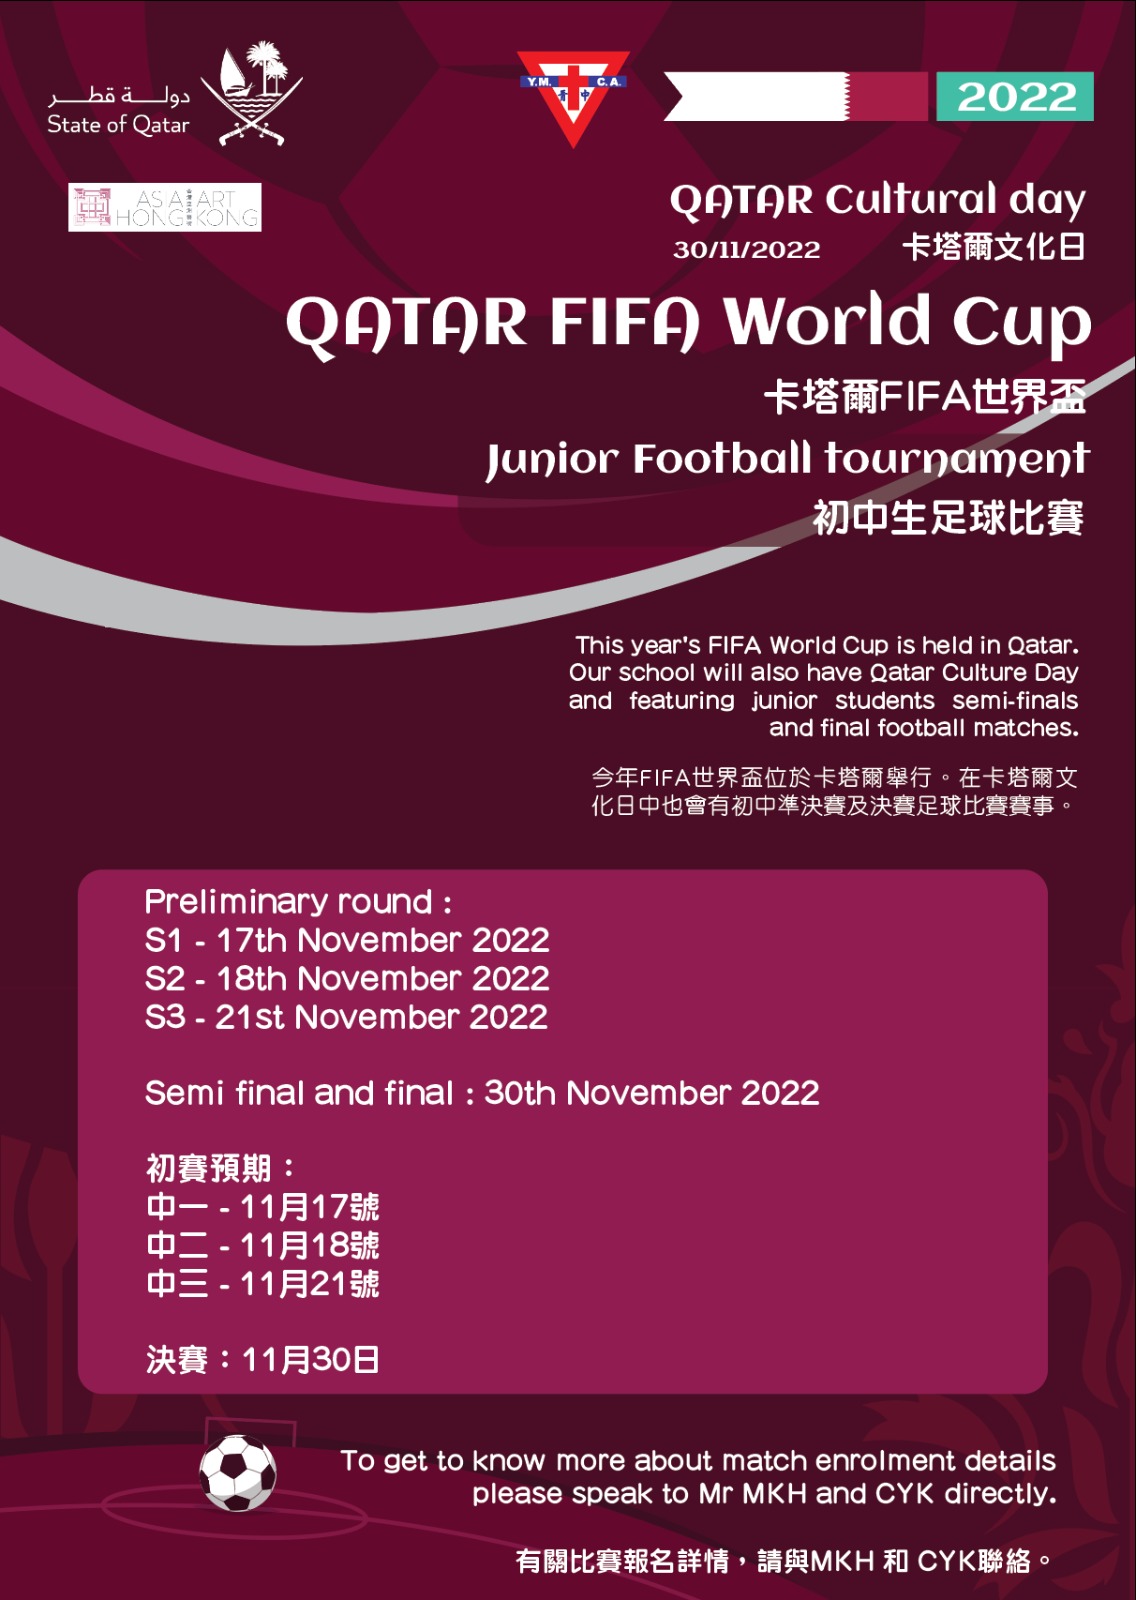 upcoming event : JUNIOR FOOTBALL TOURNAMENT (QATAR FIFA WORLD CUP)